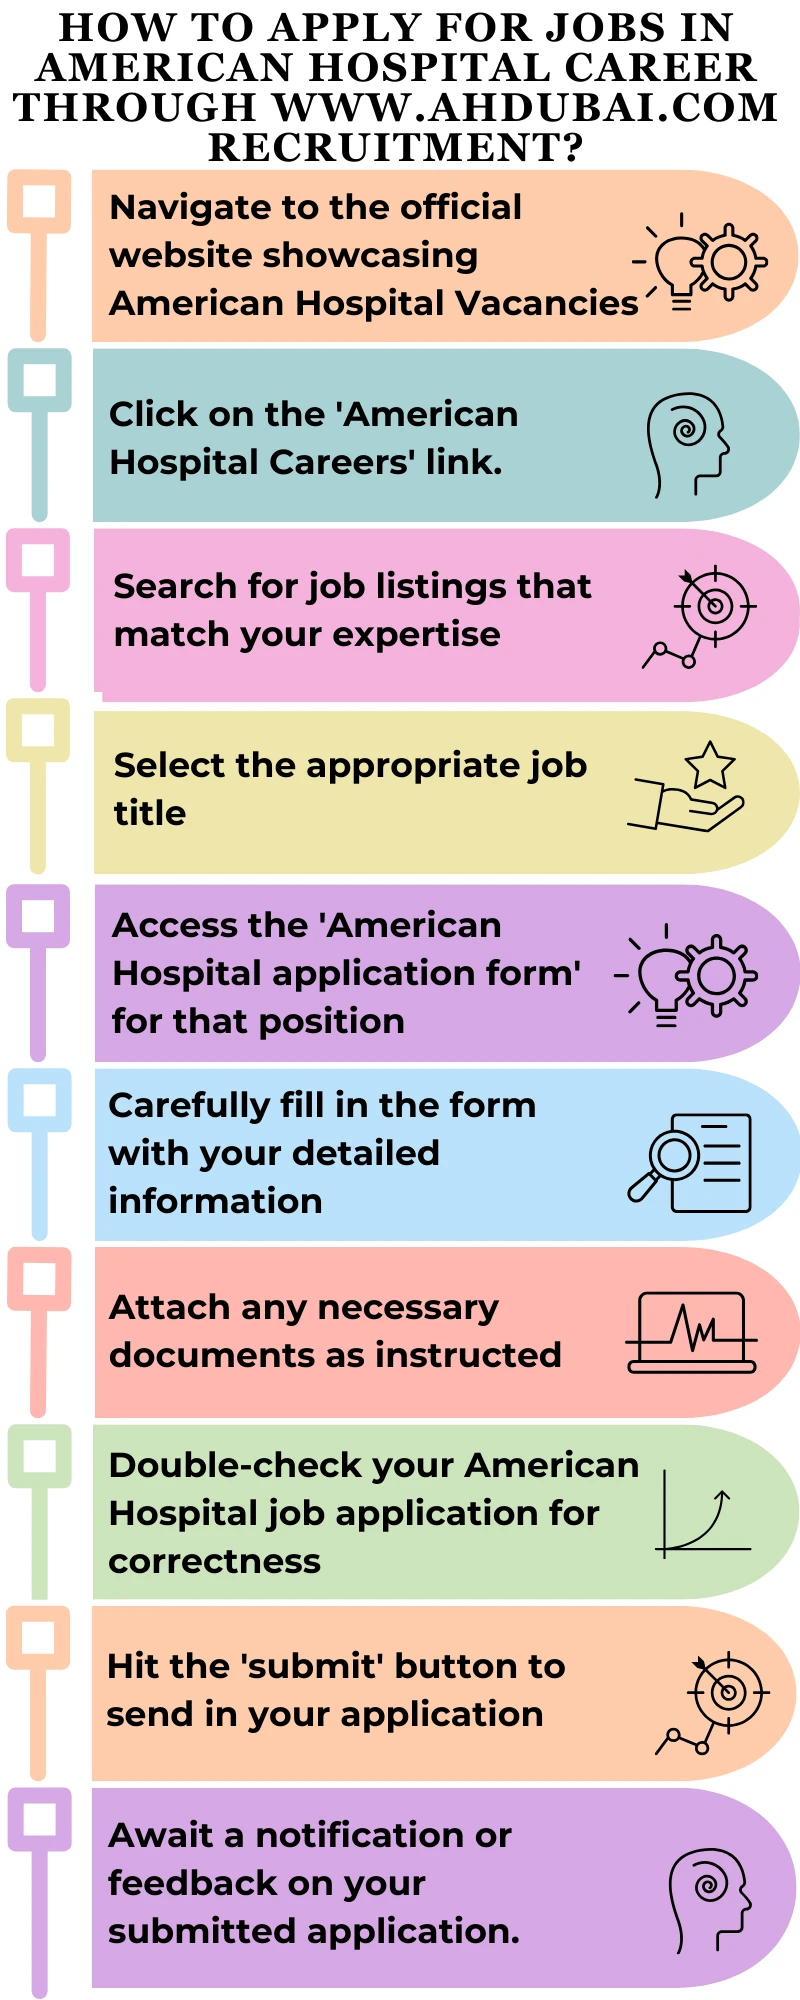 How to Apply for Jobs in American Hospital Career through www.ahdubai.com recruitment?